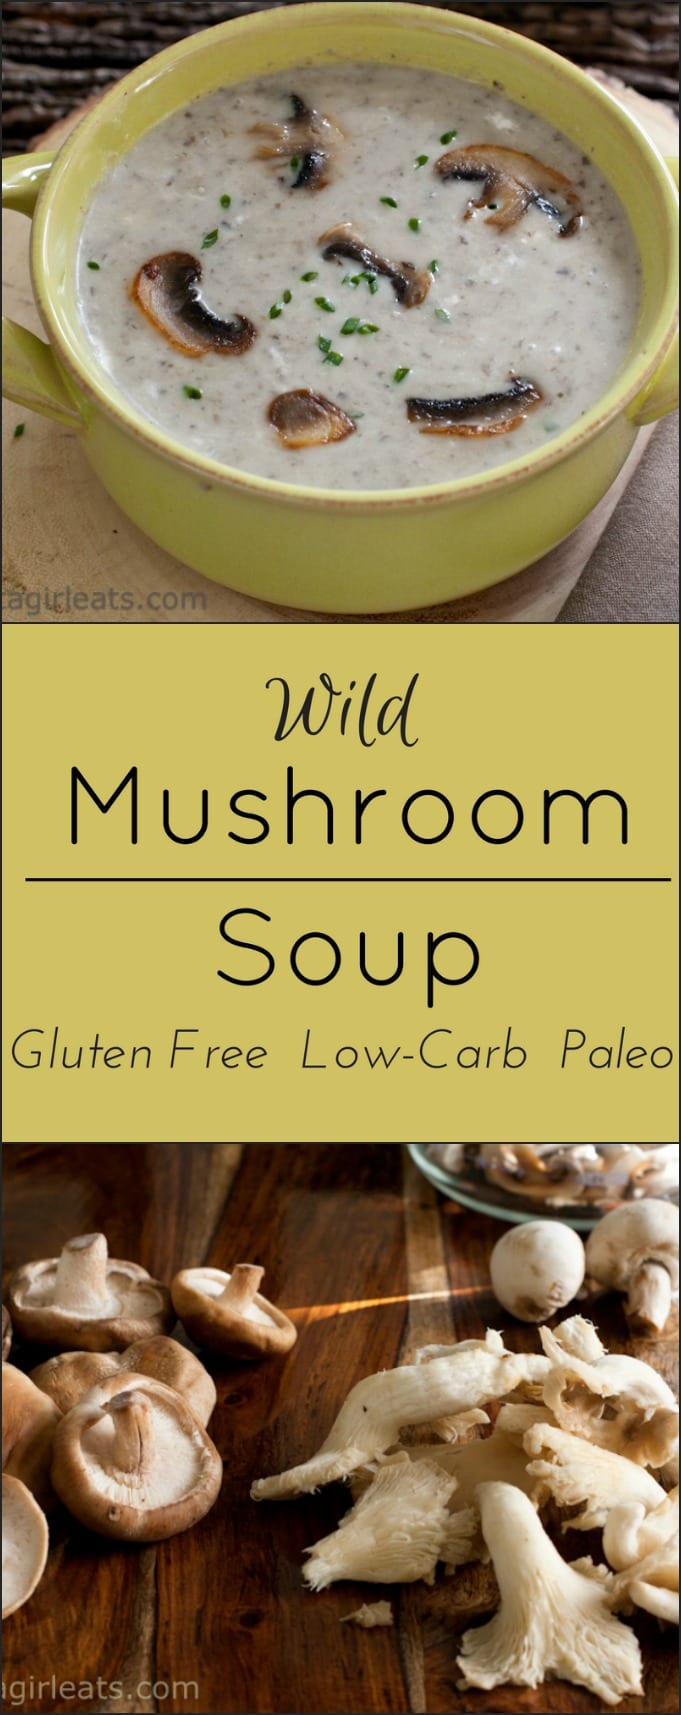 Gluten free wild mushroom soup: image for Pinterest.